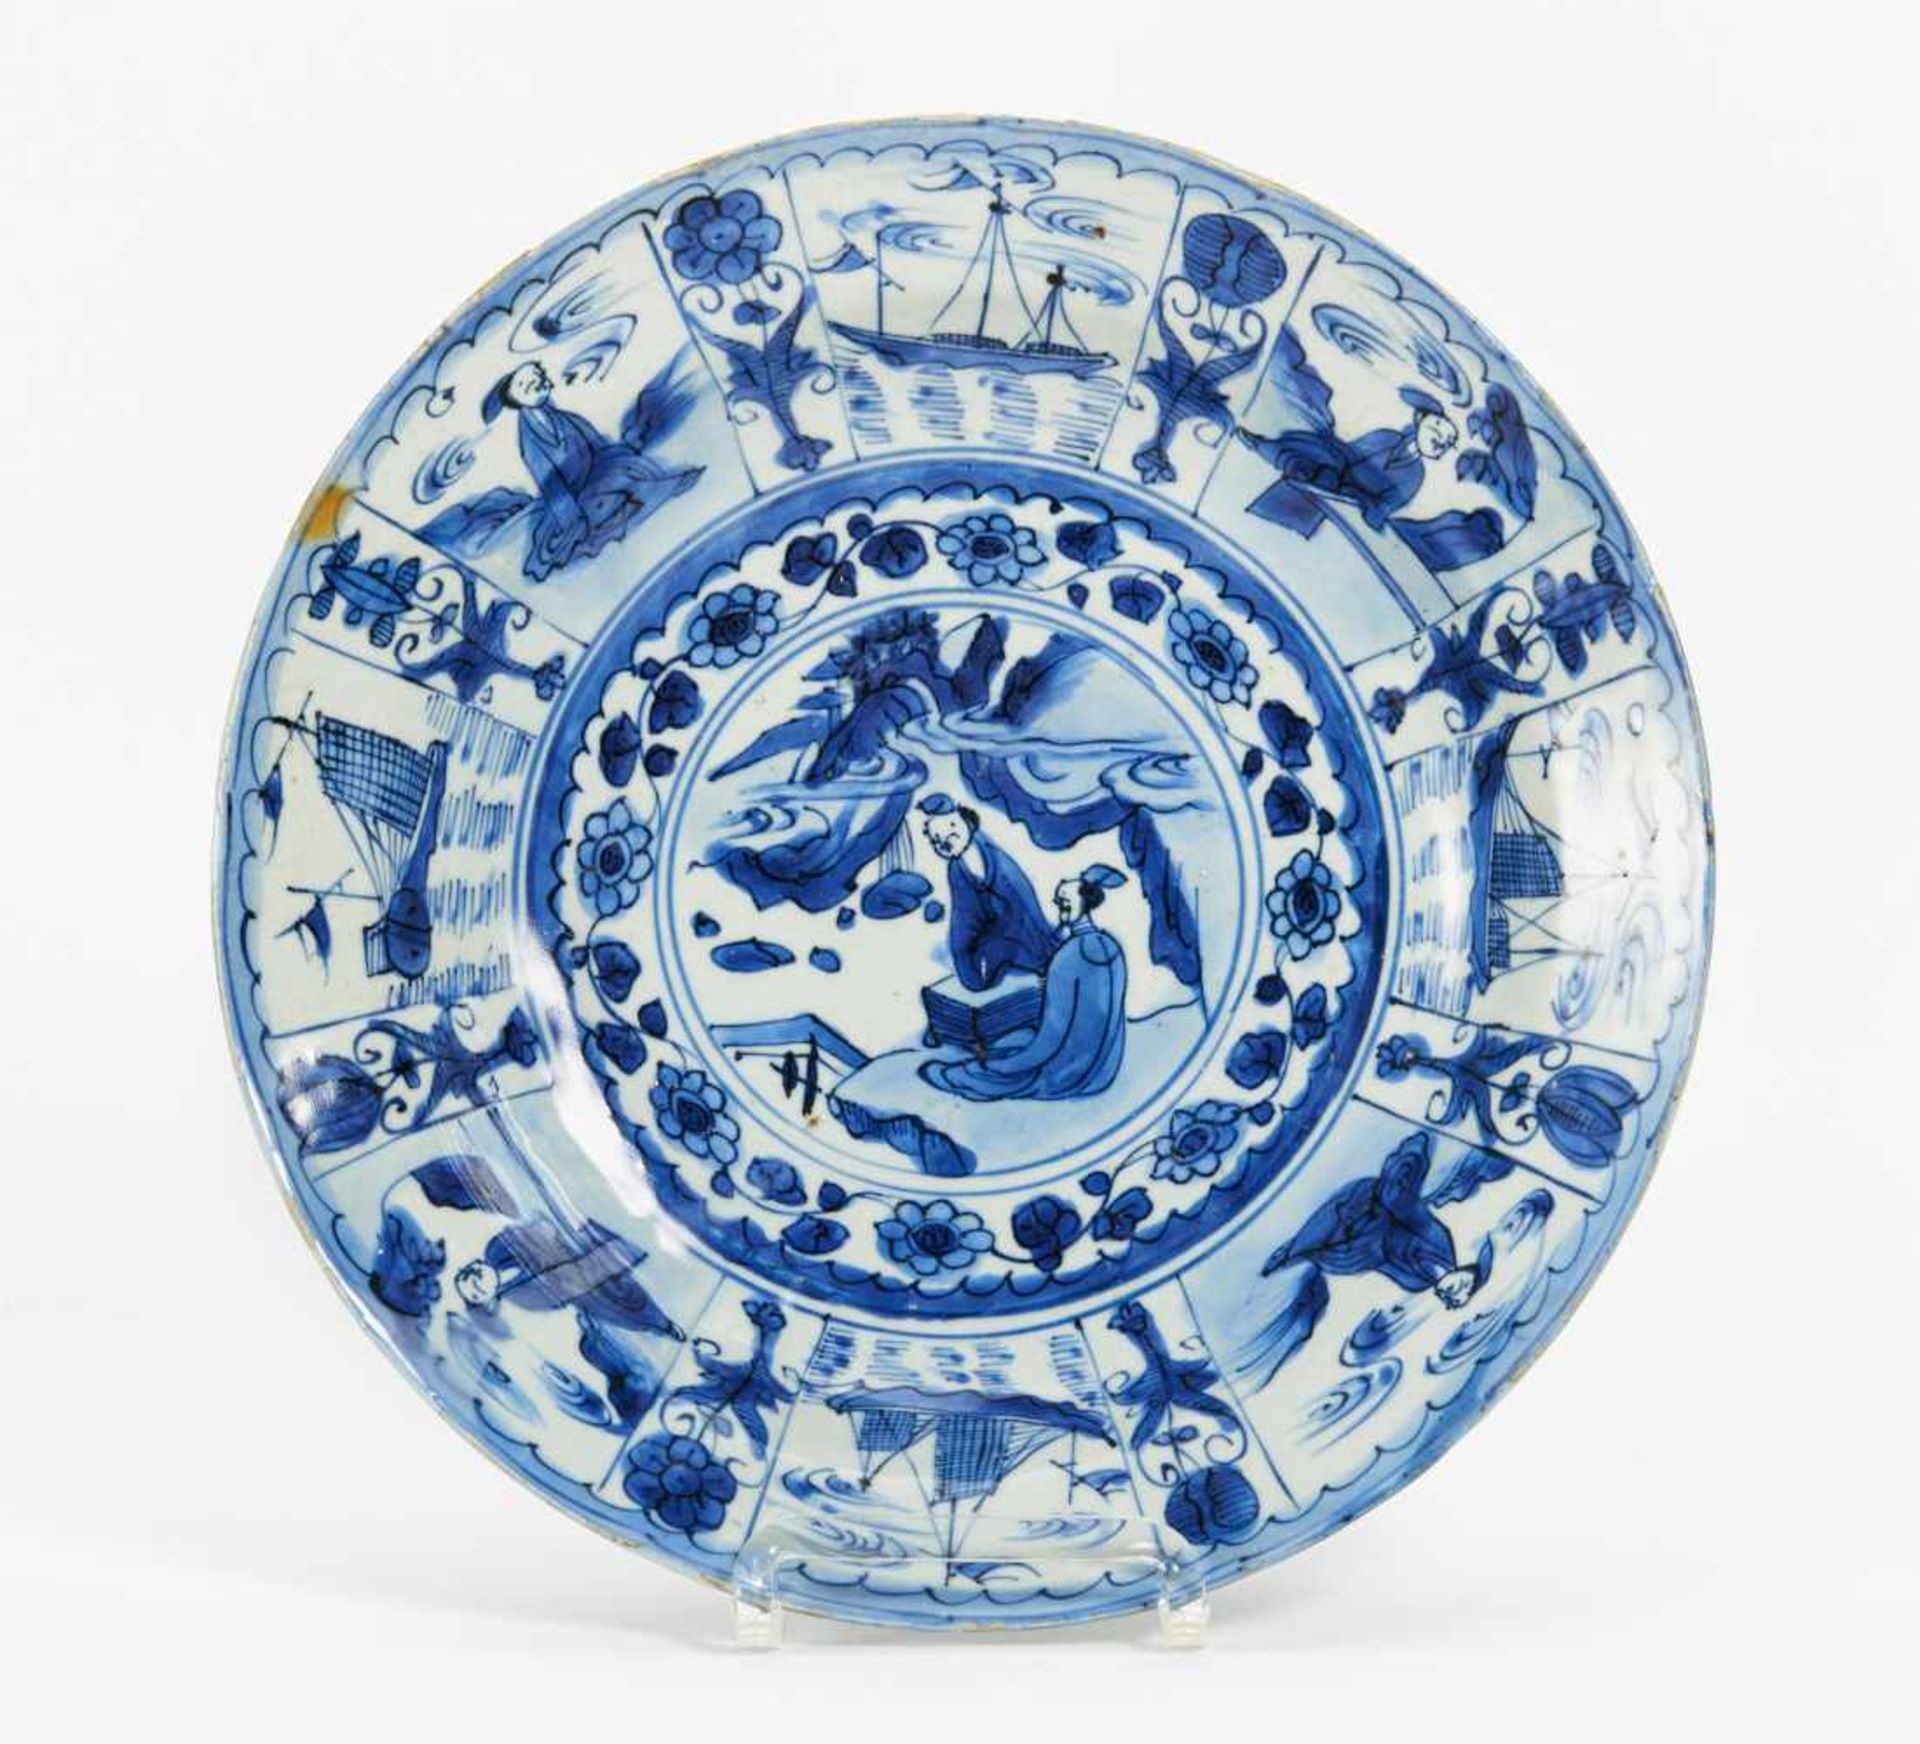 KRAAK DISH WITH SCHOLARS. China. Ming dynasty. 17th c. Porcelain painted underglaze blue. H.5.7cm, Ø